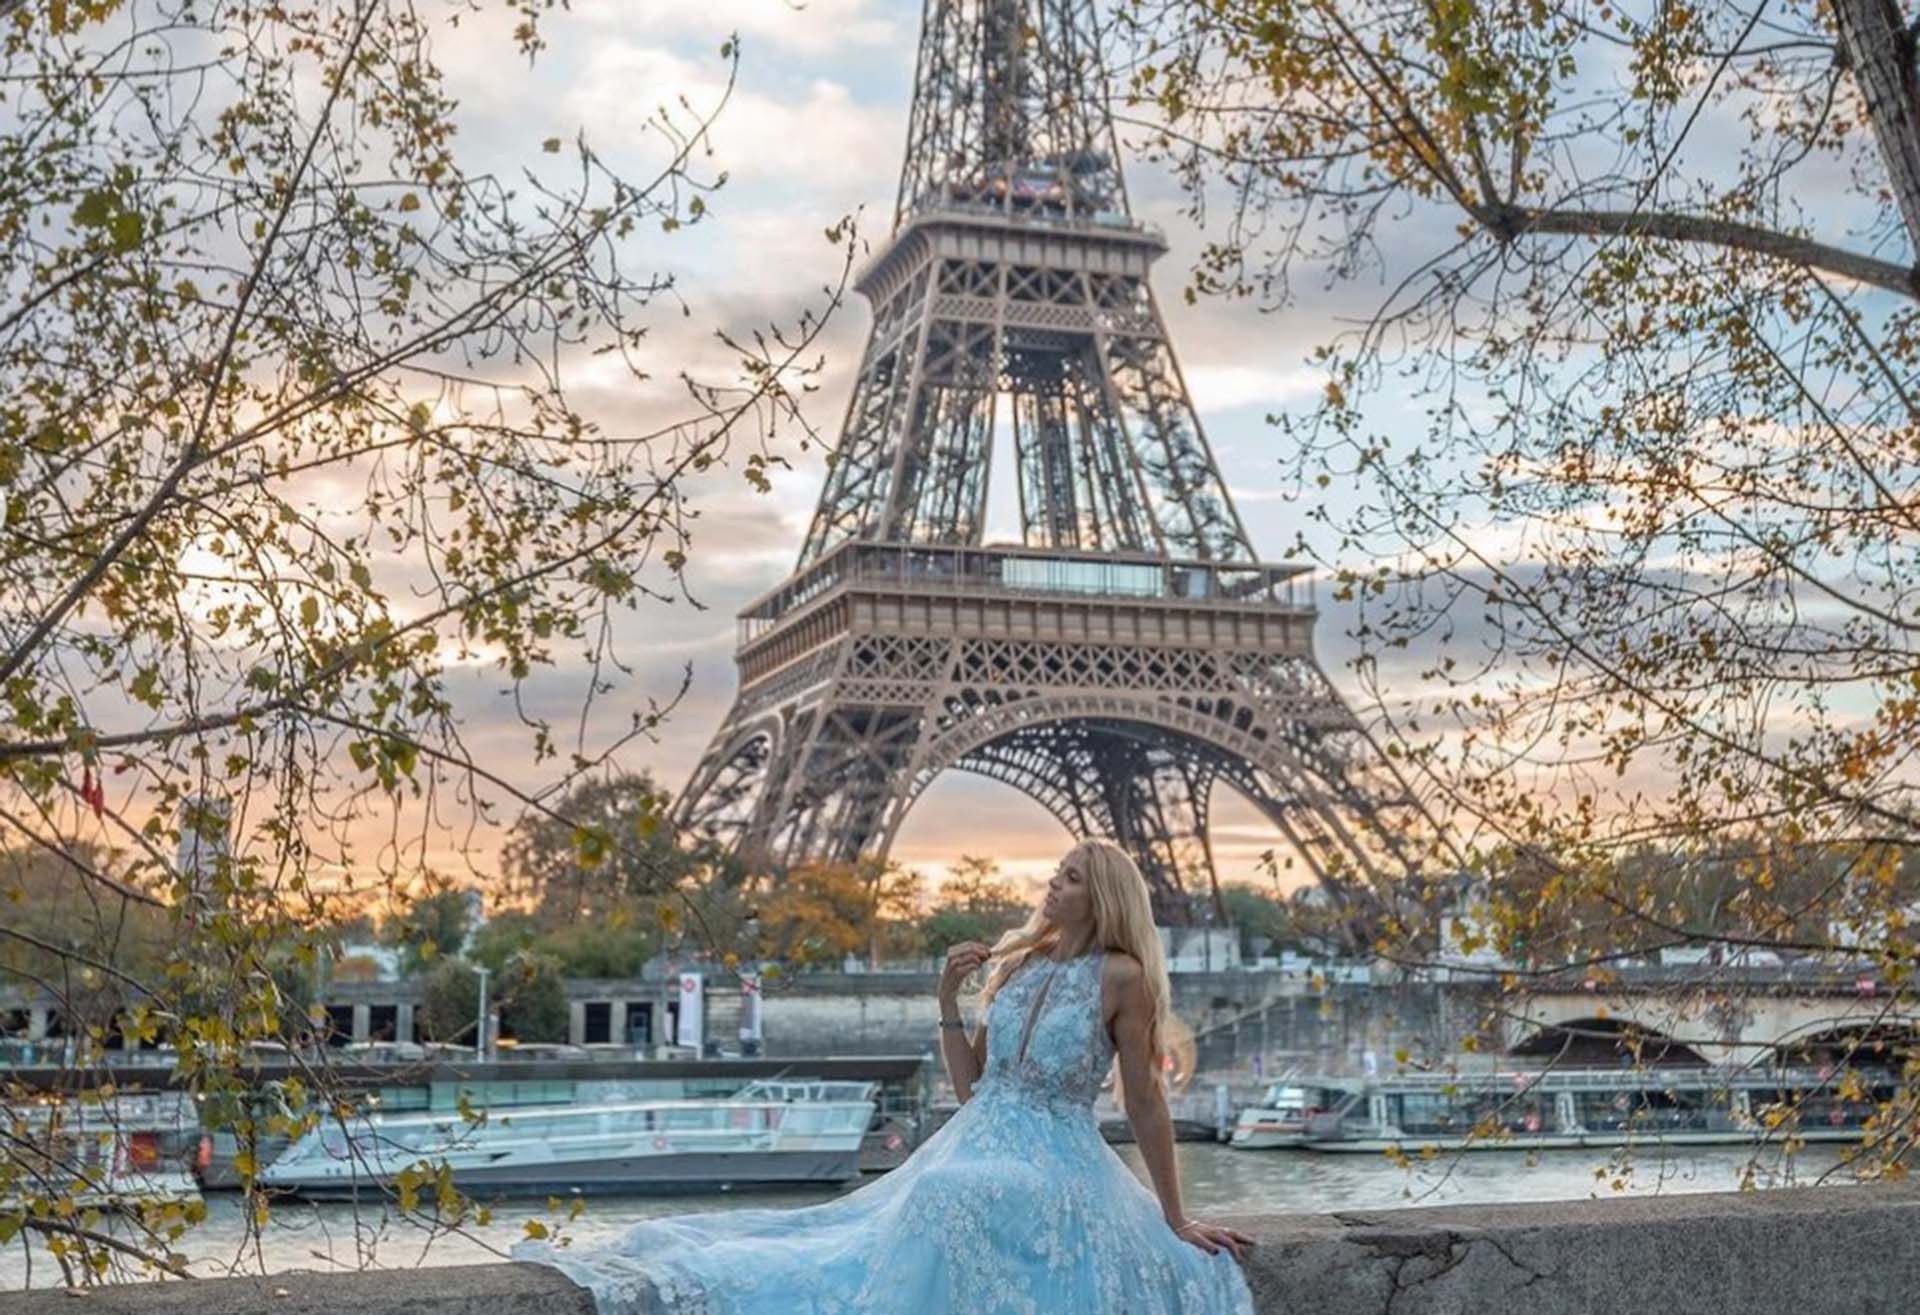 Autumn’s Embrace: Eiffel Tower in Fall Splendor